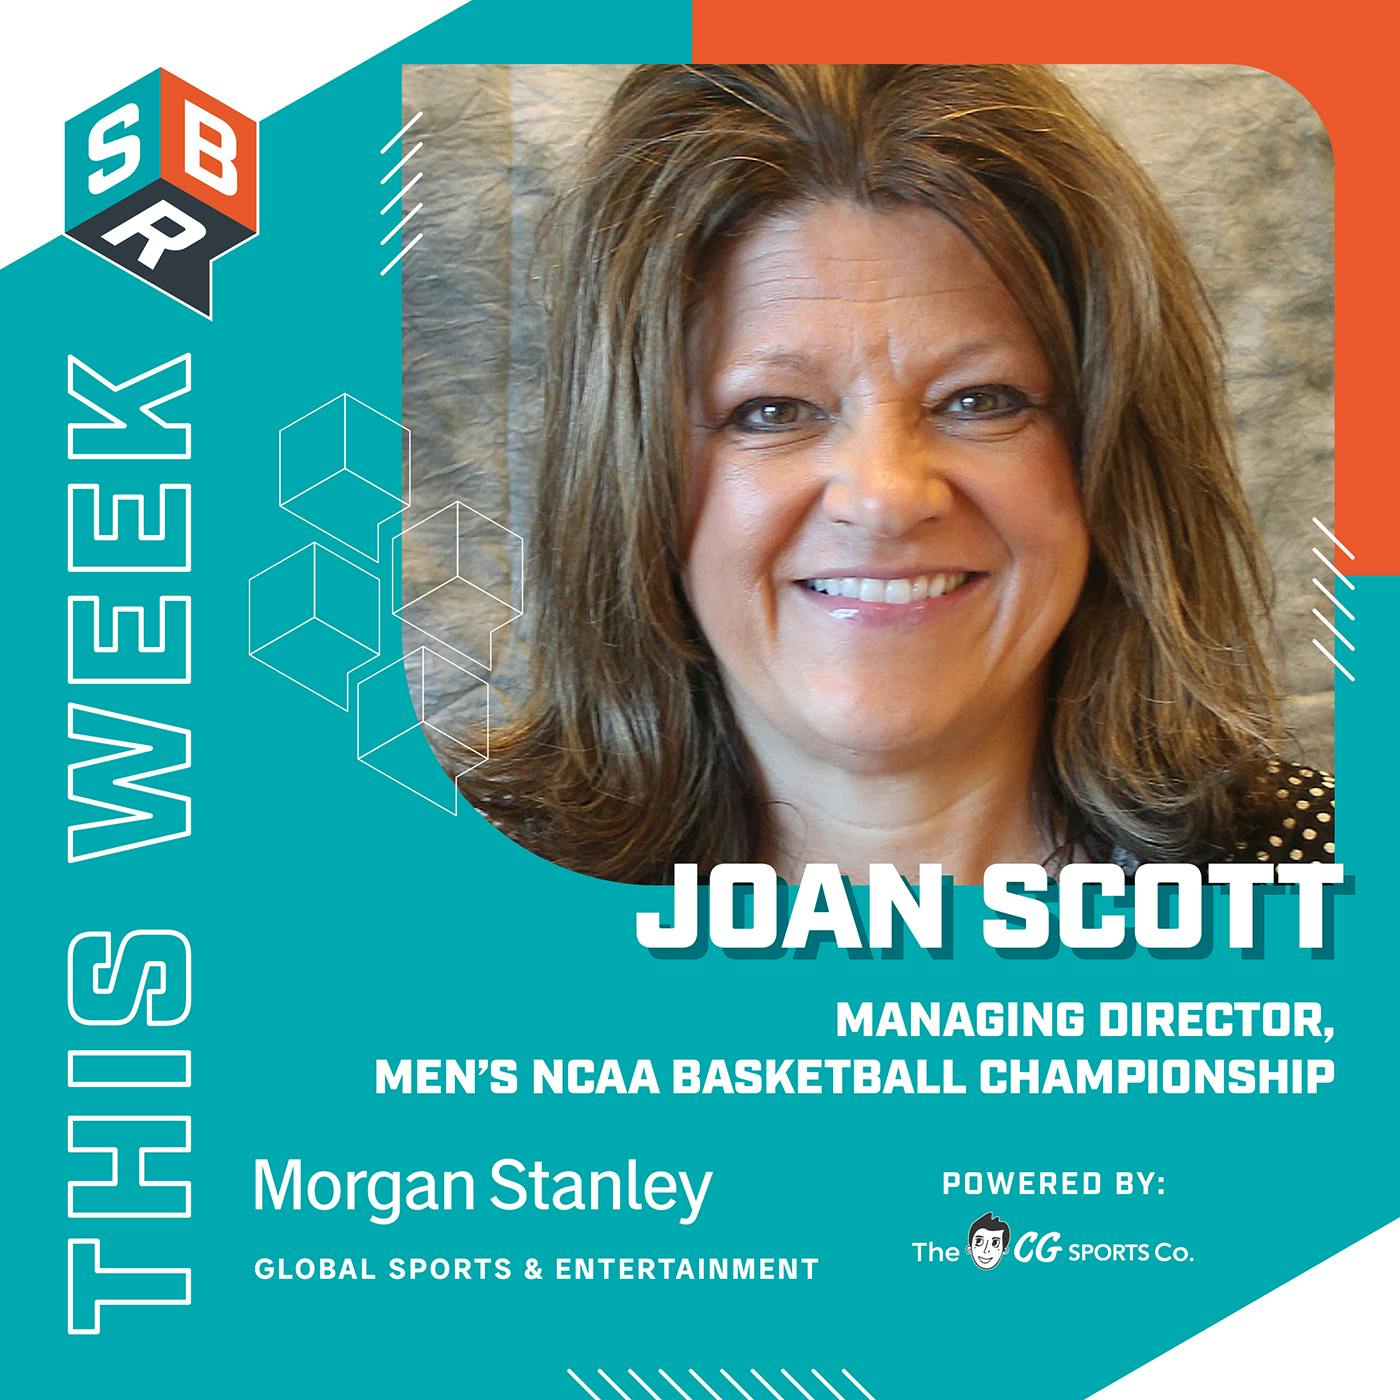 JoAn Scott, Managing Director of the NCAA Men’s Basketball Championships